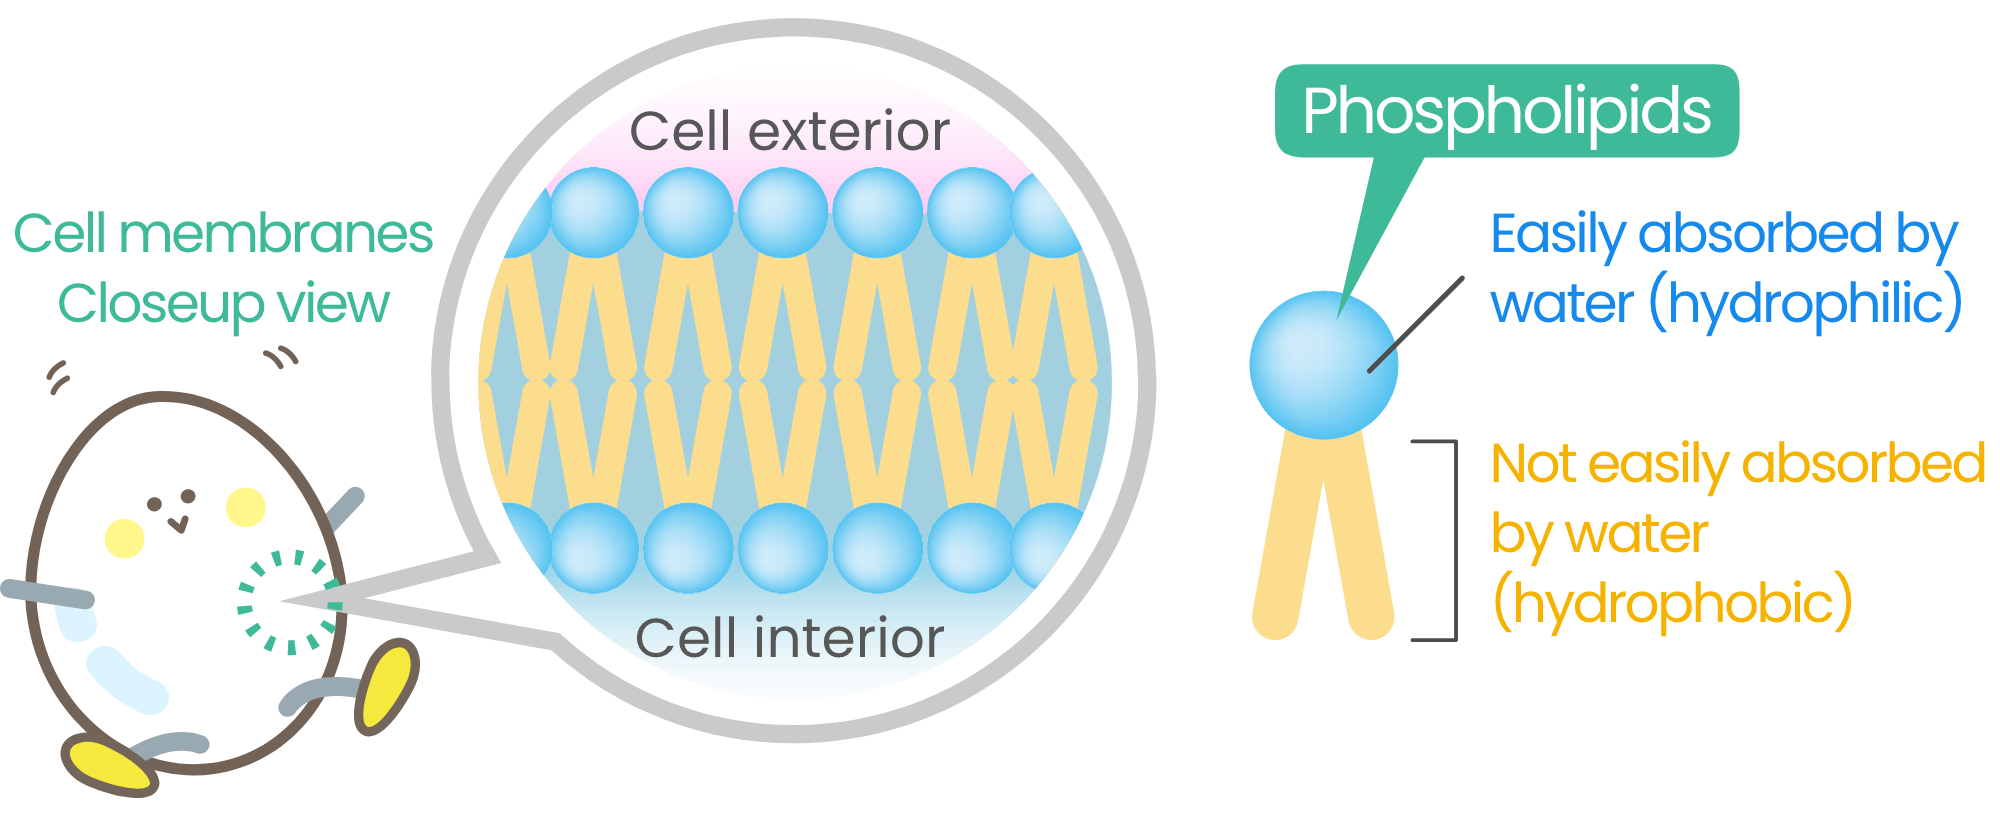 Cell membranes Closeup view